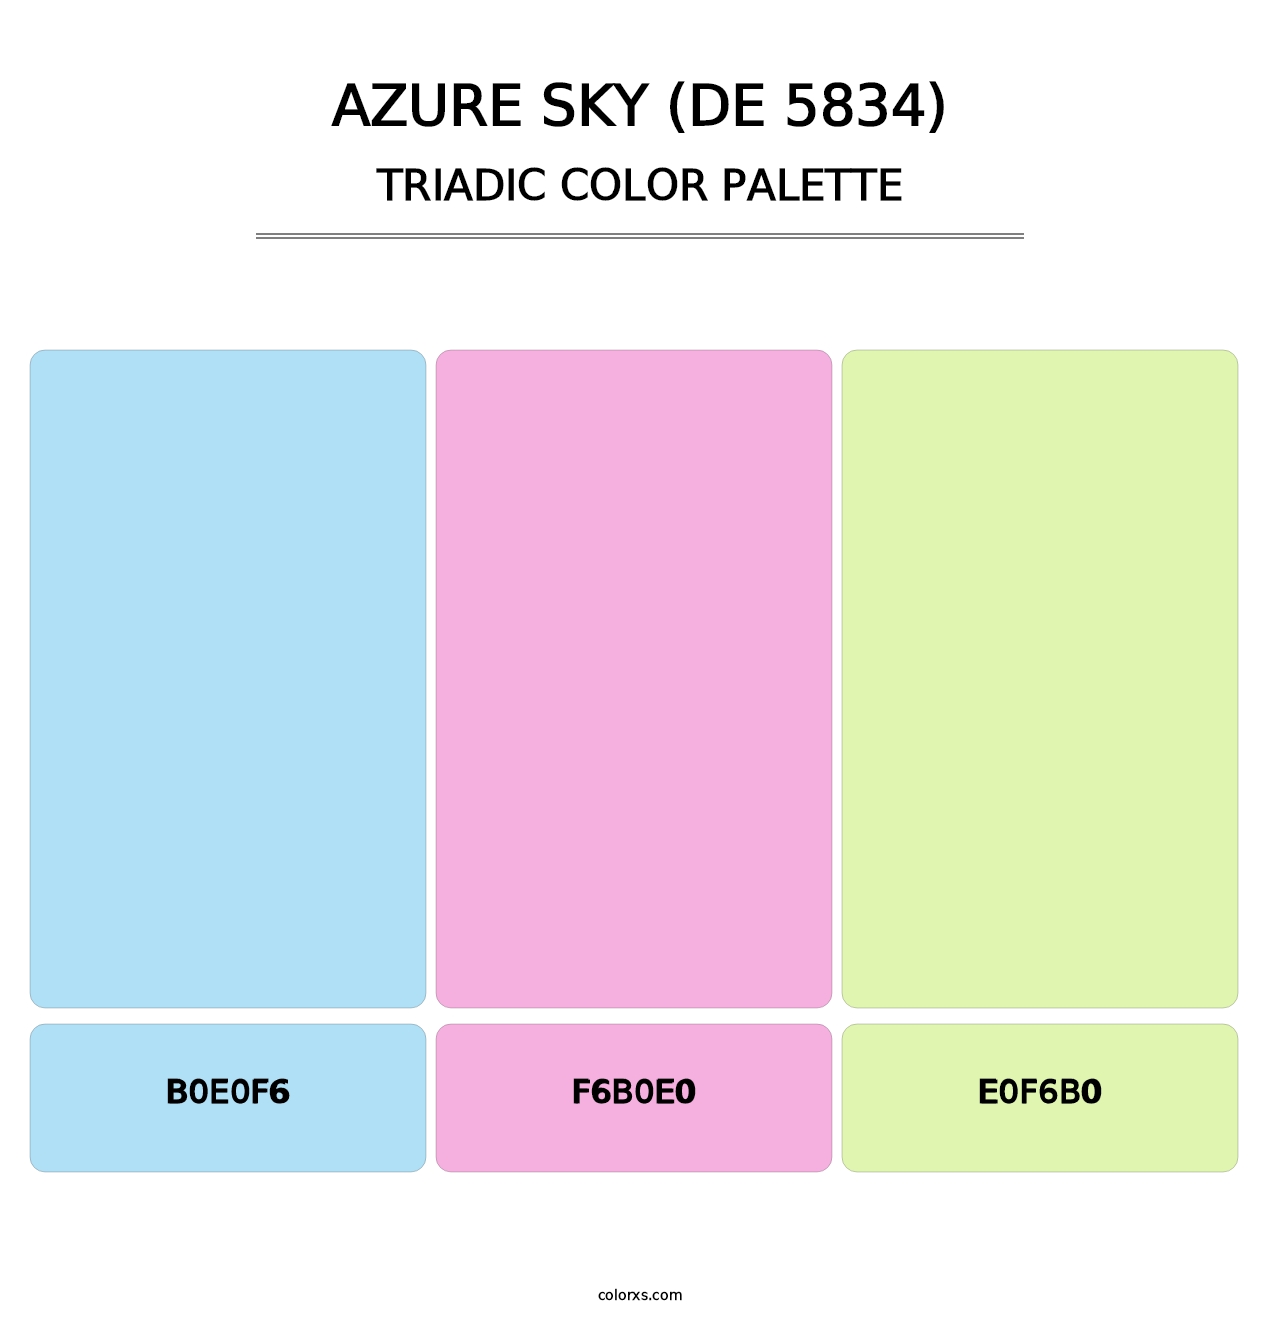 Azure Sky (DE 5834) - Triadic Color Palette